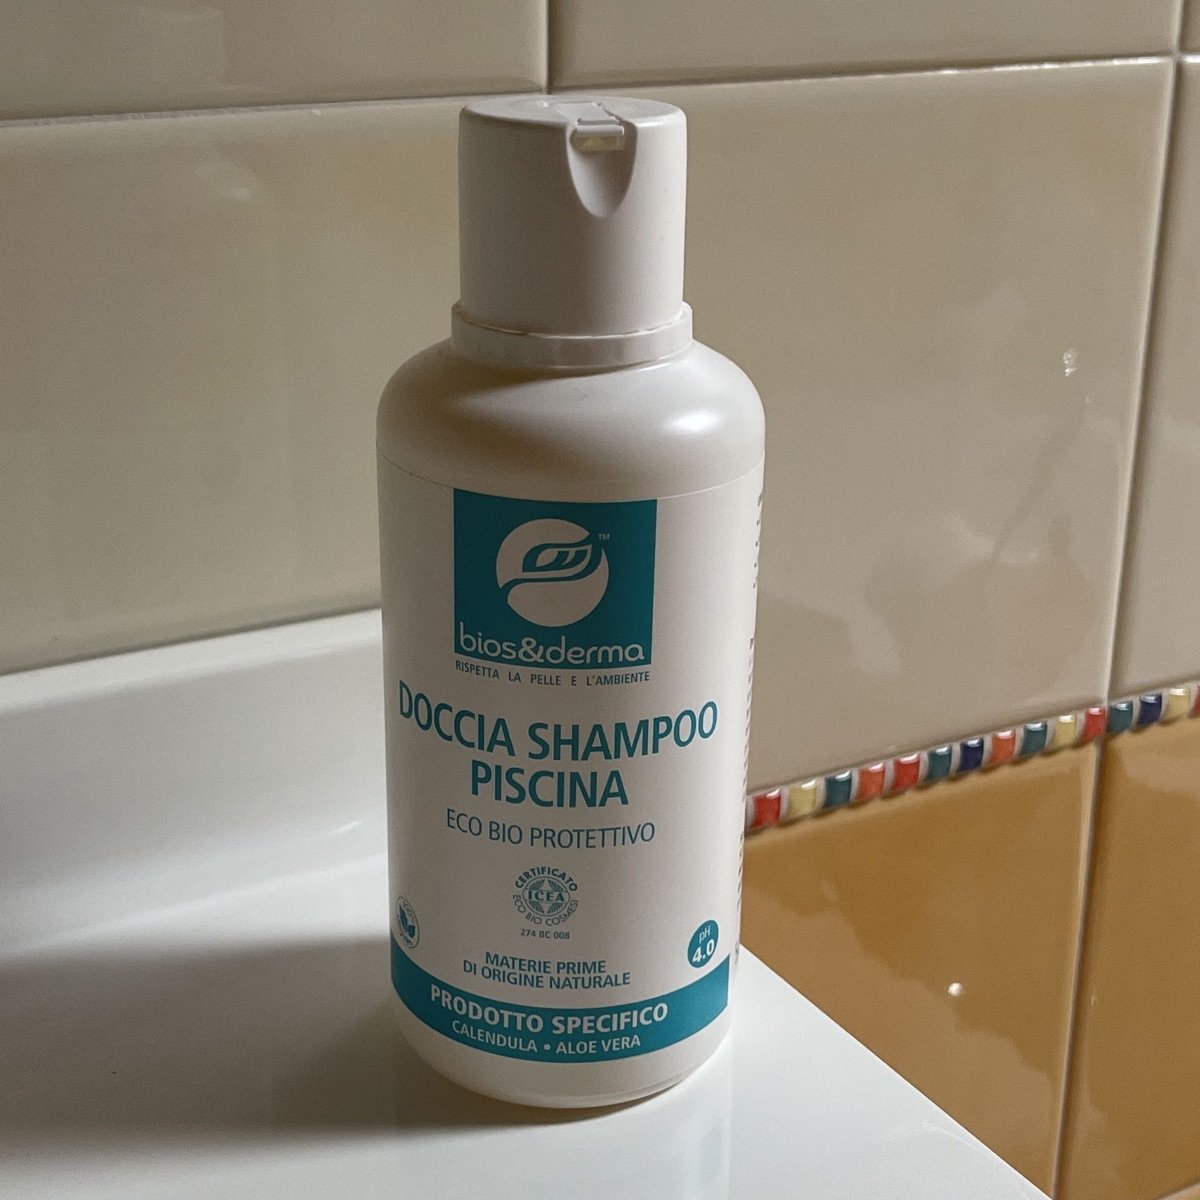 Bios & Derma Doccia Shampoo Piscina Review | abillion